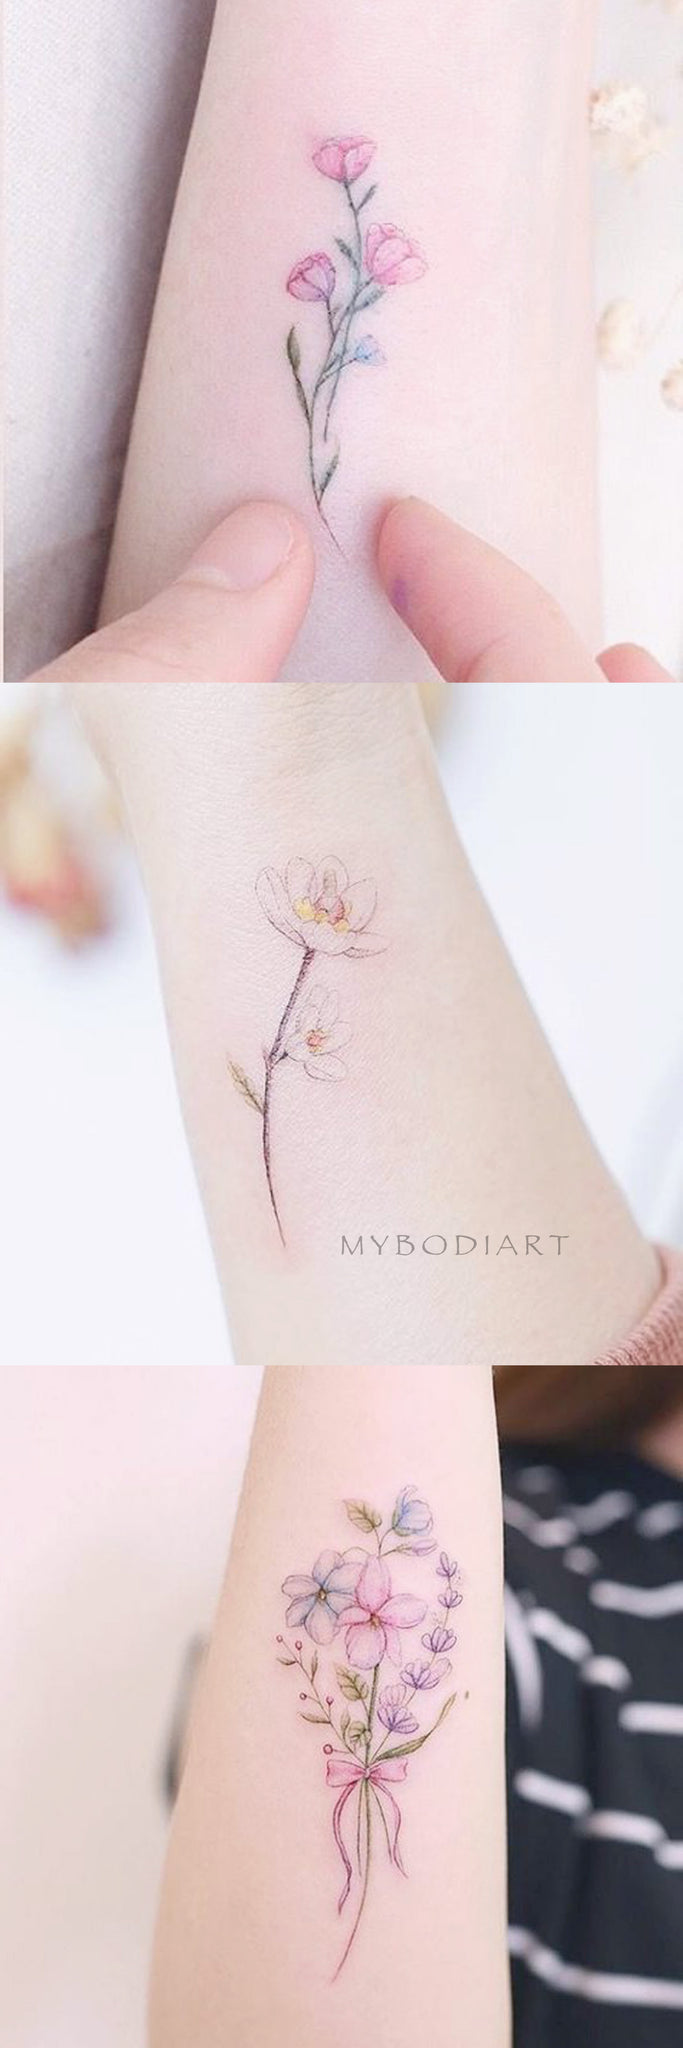 Delicate Cute Watercolor Floral Flower Rose Arm Tattoo Ideas for Women -  Ideas lindas de tatuaje de brazo de flor de acuarela para mujeres - www.MyBodiArt.com 